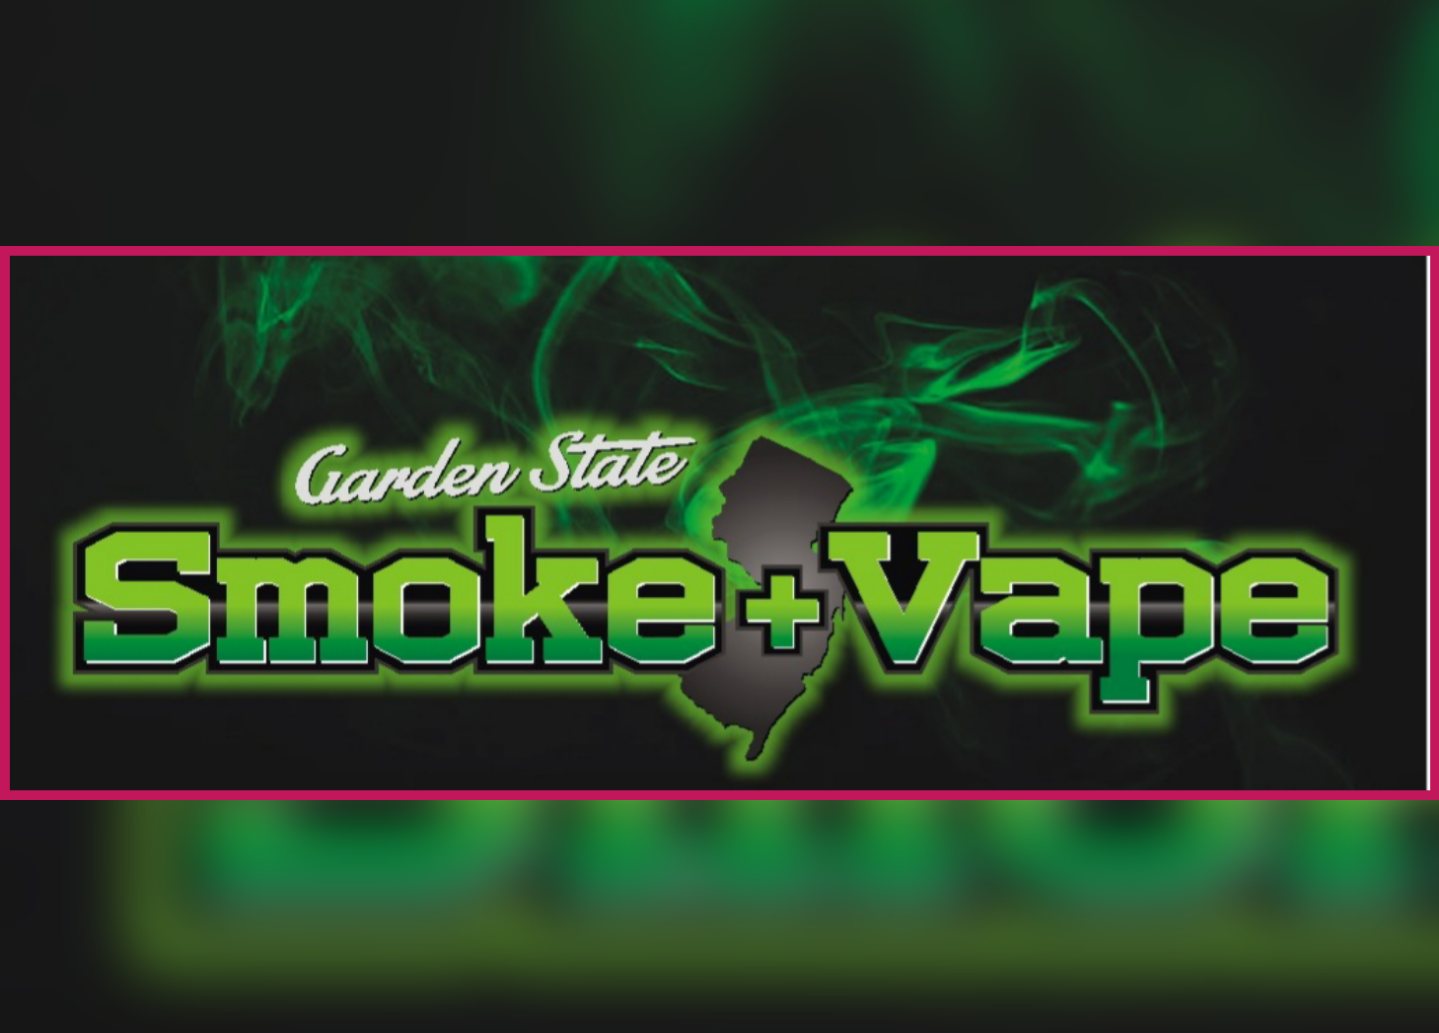 Garden State Smoke + Vape shop logo